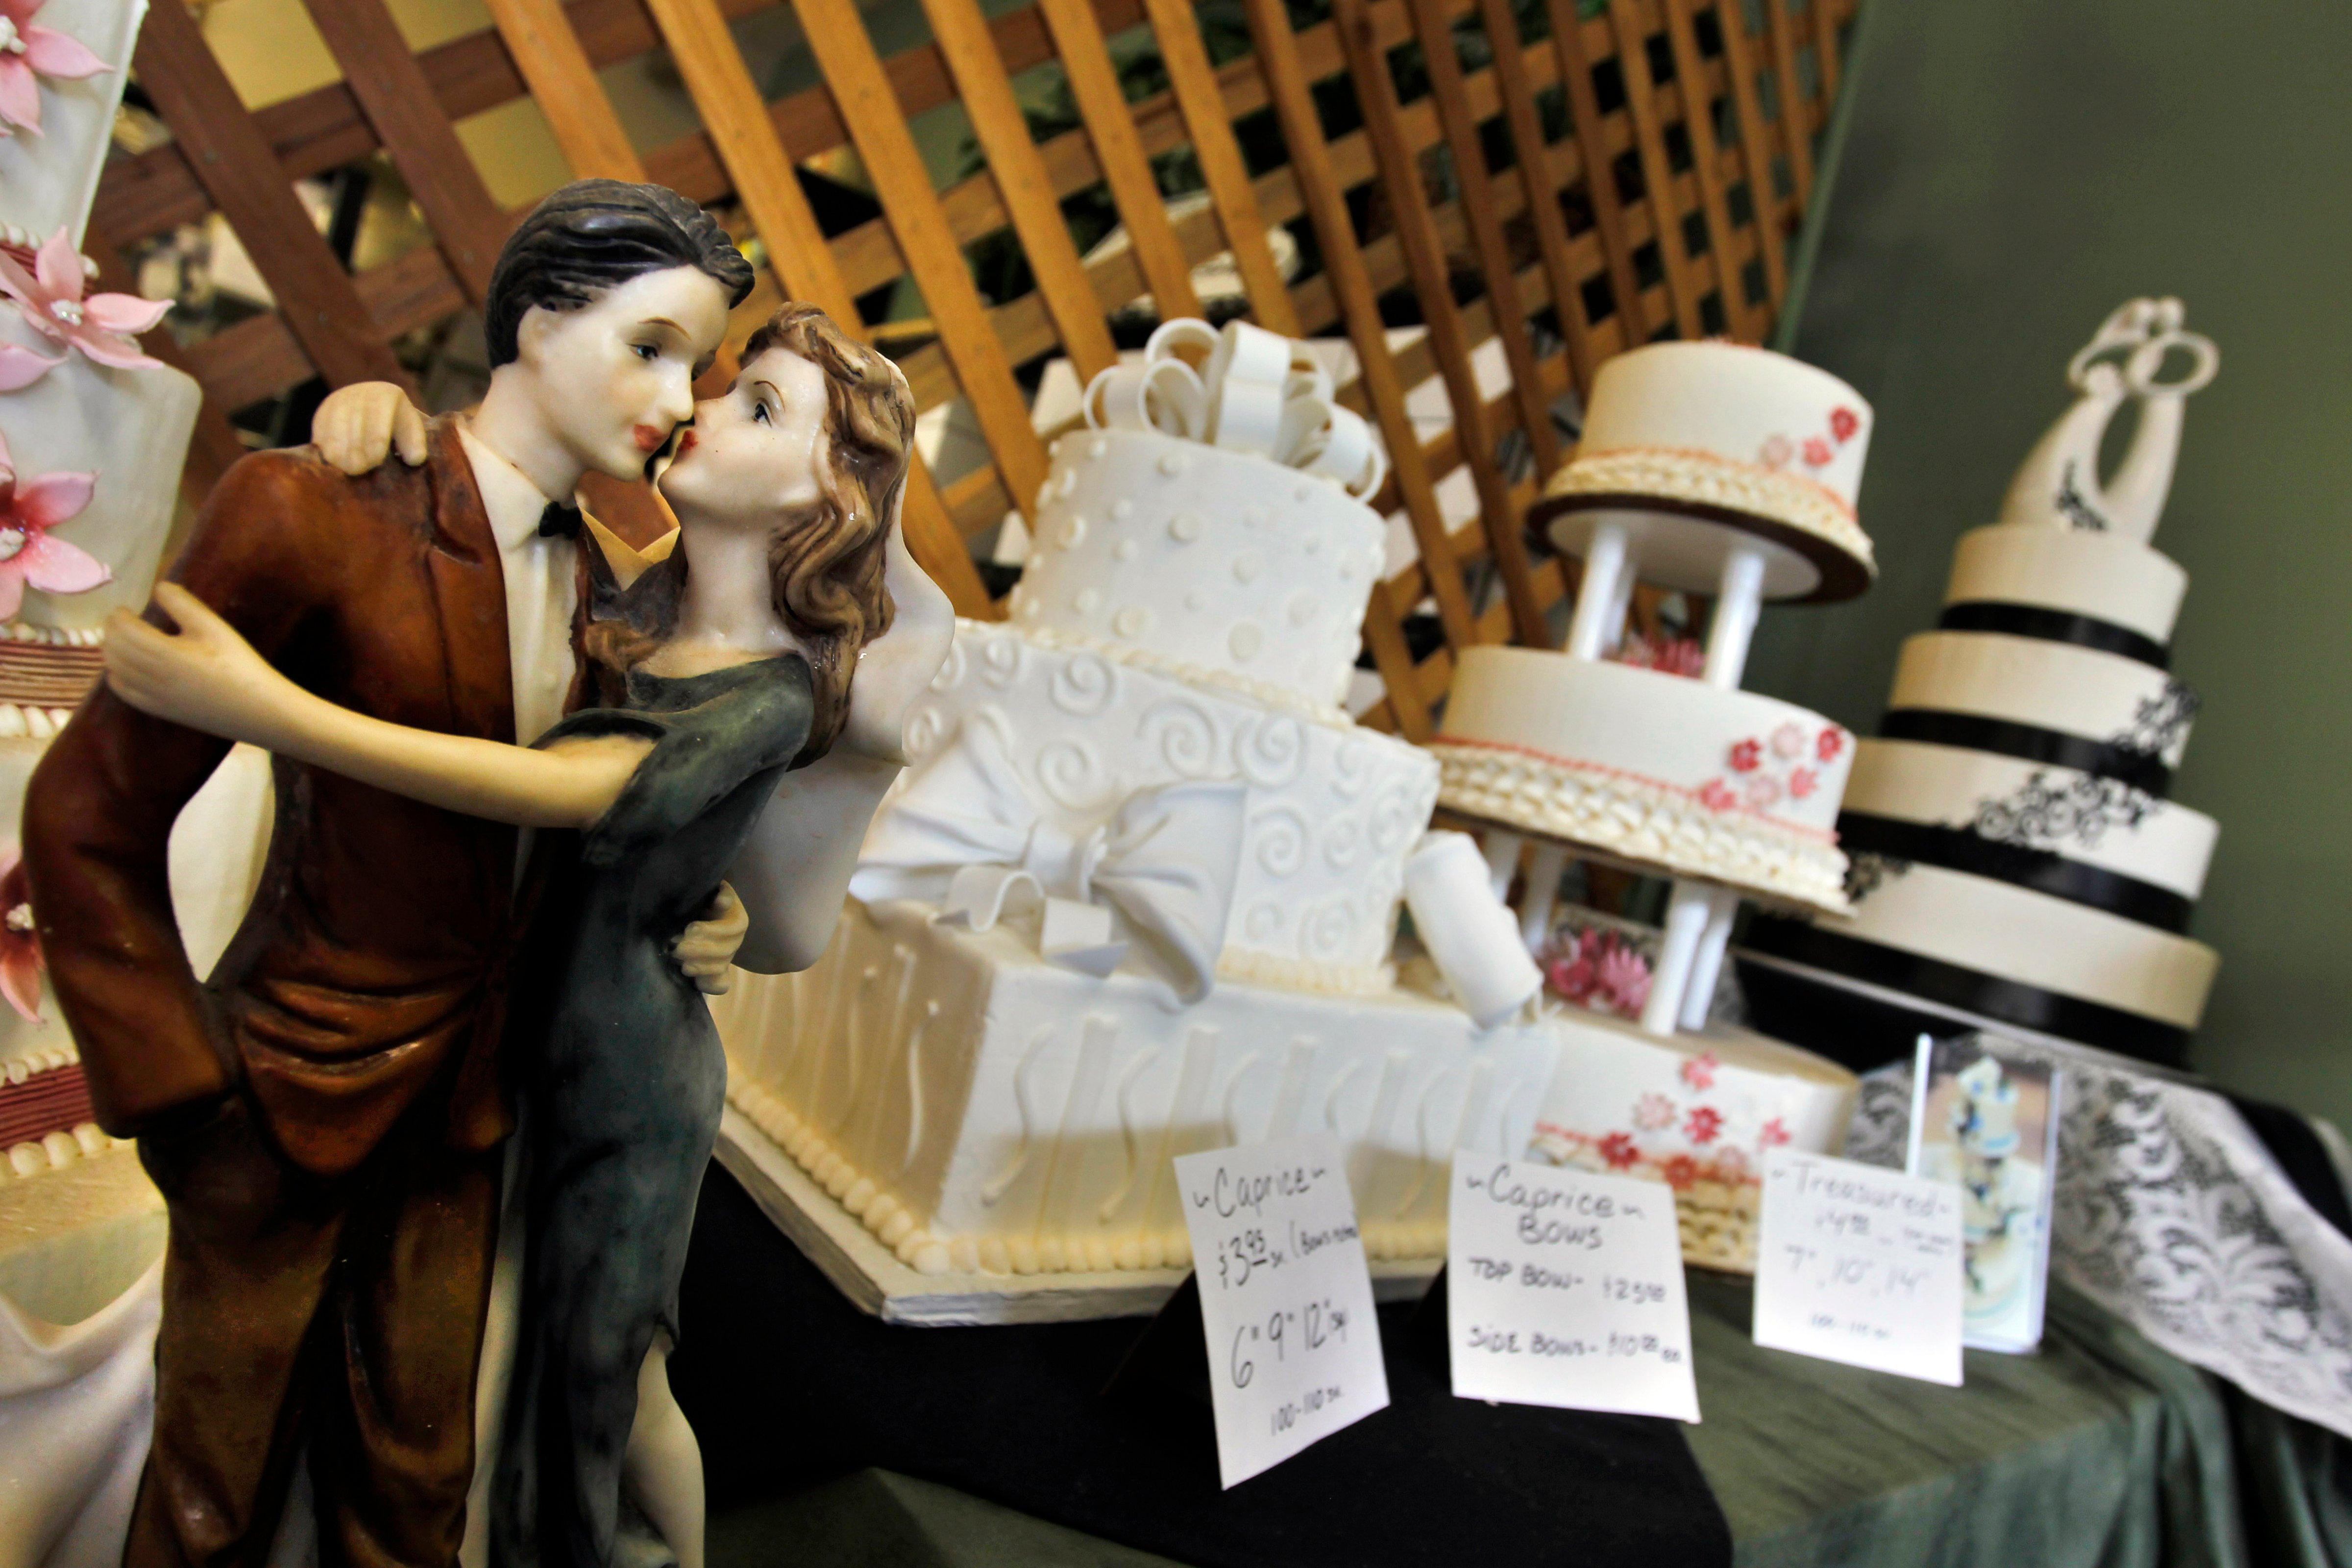 Colorado Wedding Cake Discrimination